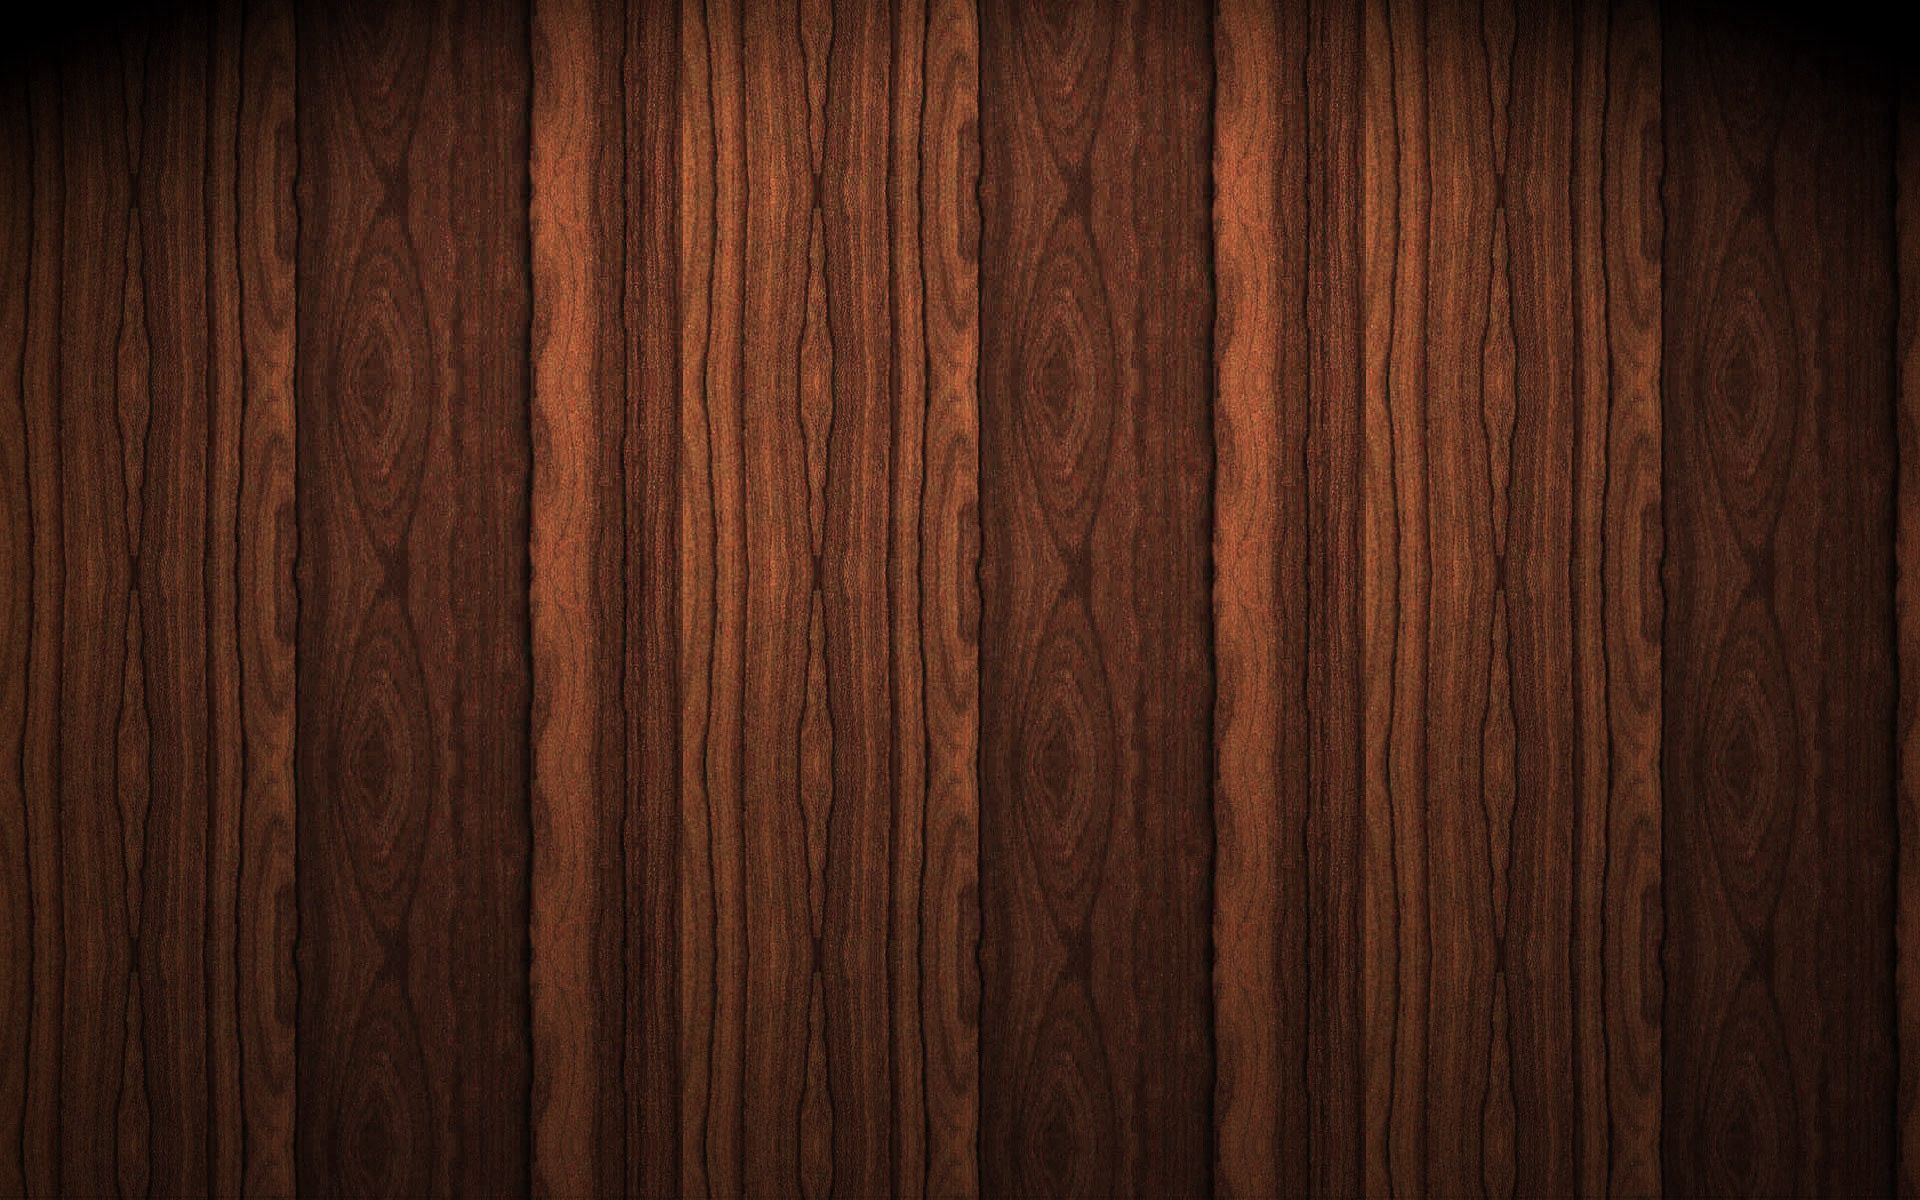 Wooden Widescreen image